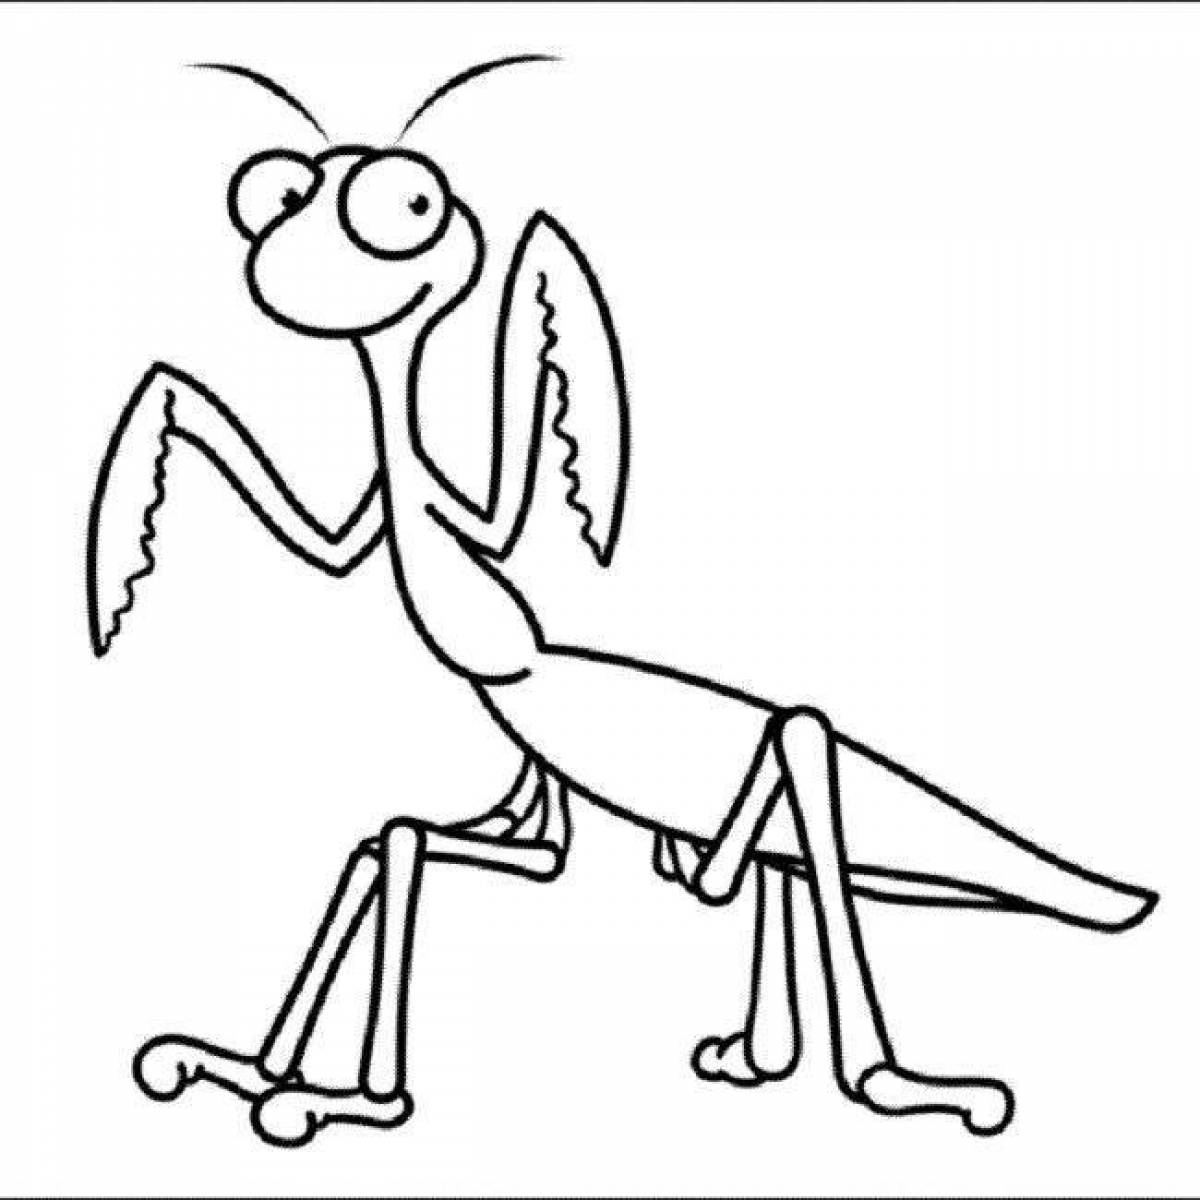 Mantis coloring page